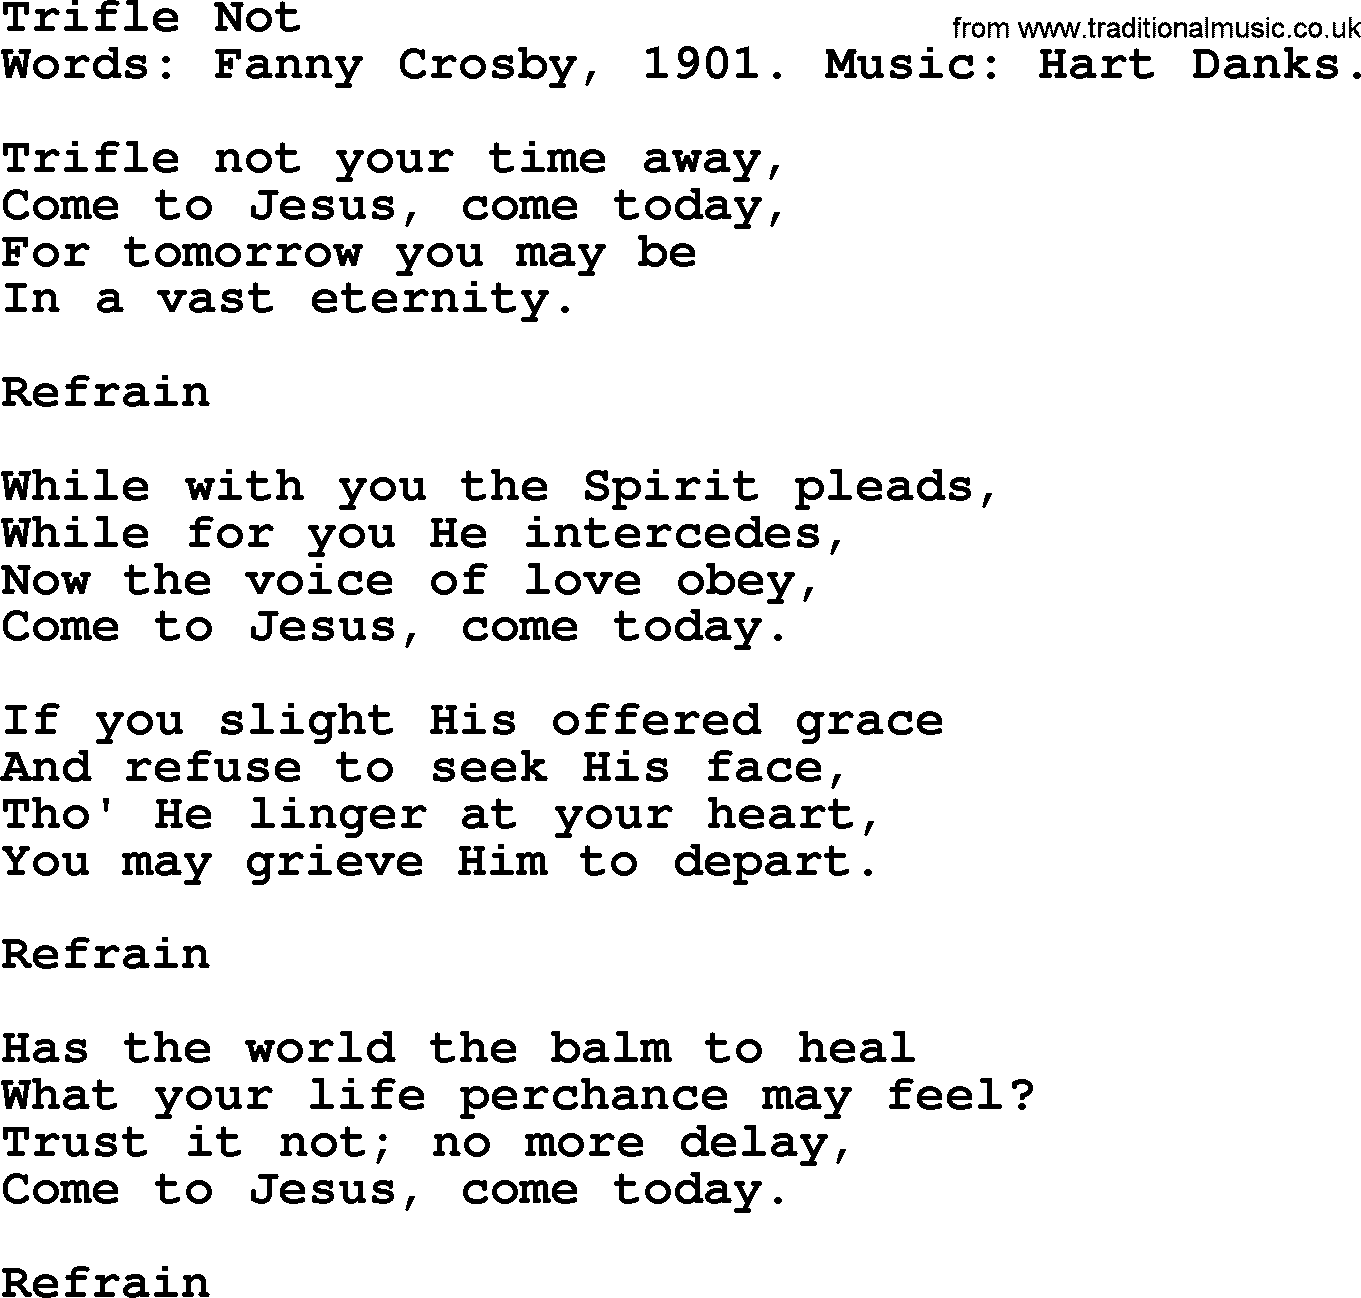 Fanny Crosby song: Trifle Not, lyrics